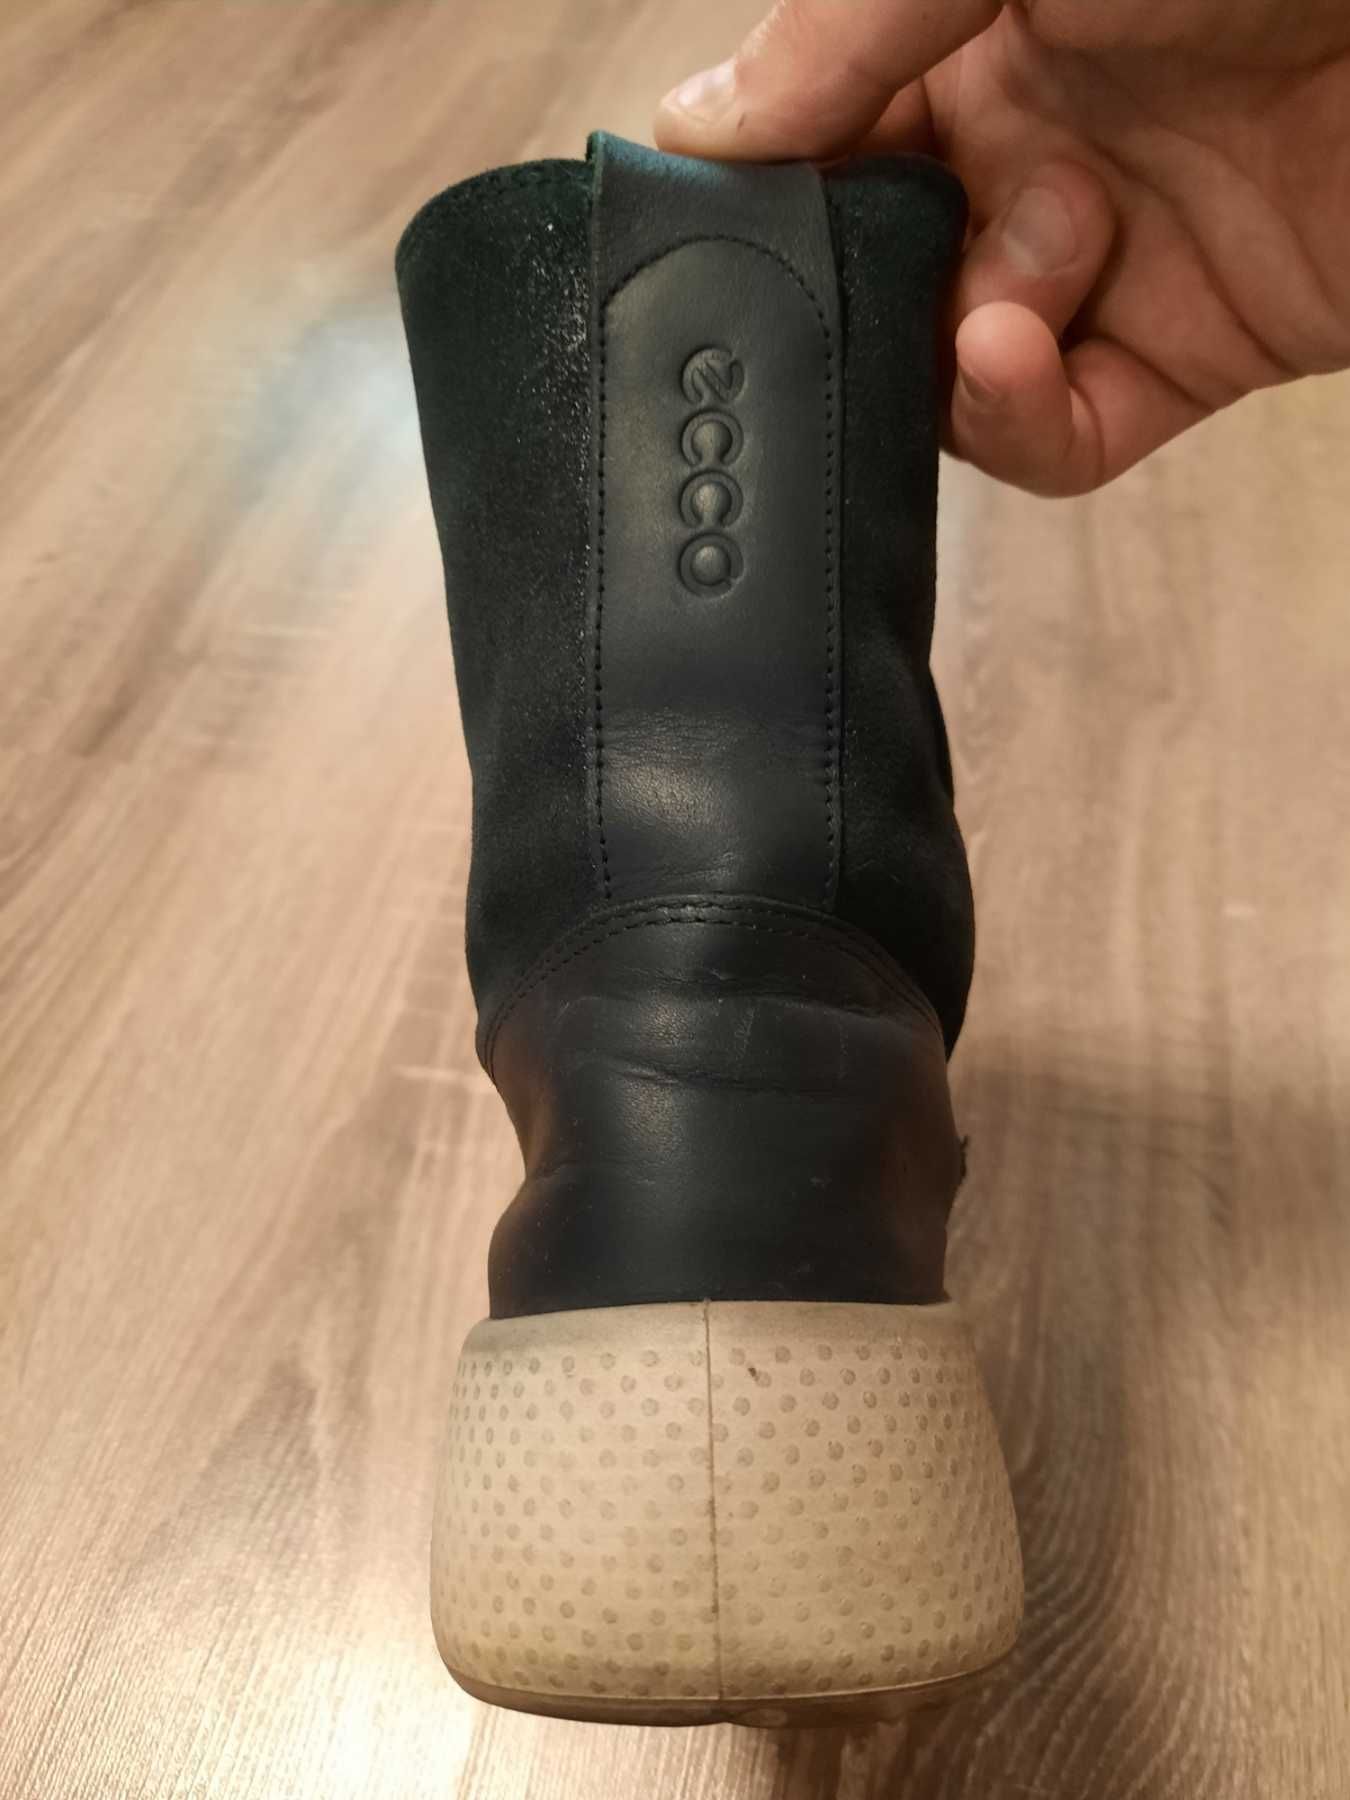 Чоботи напівчоботи ботинки сапожки ECCO 38 розмір бв зима